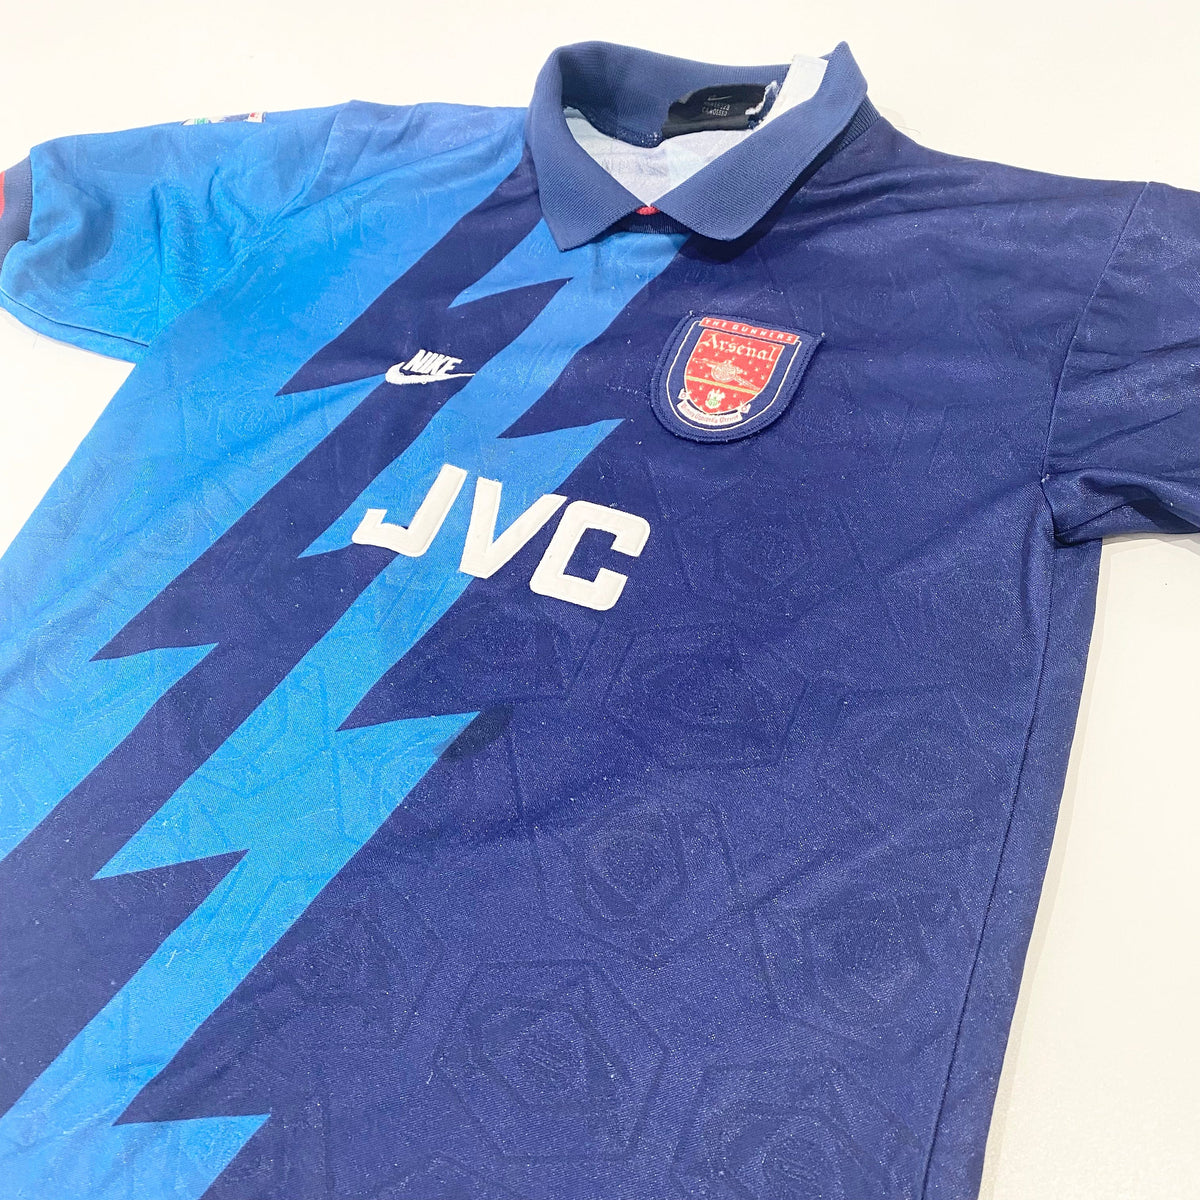 Classic and Retro Arsenal Football Shirts � Vintage Football Shirts